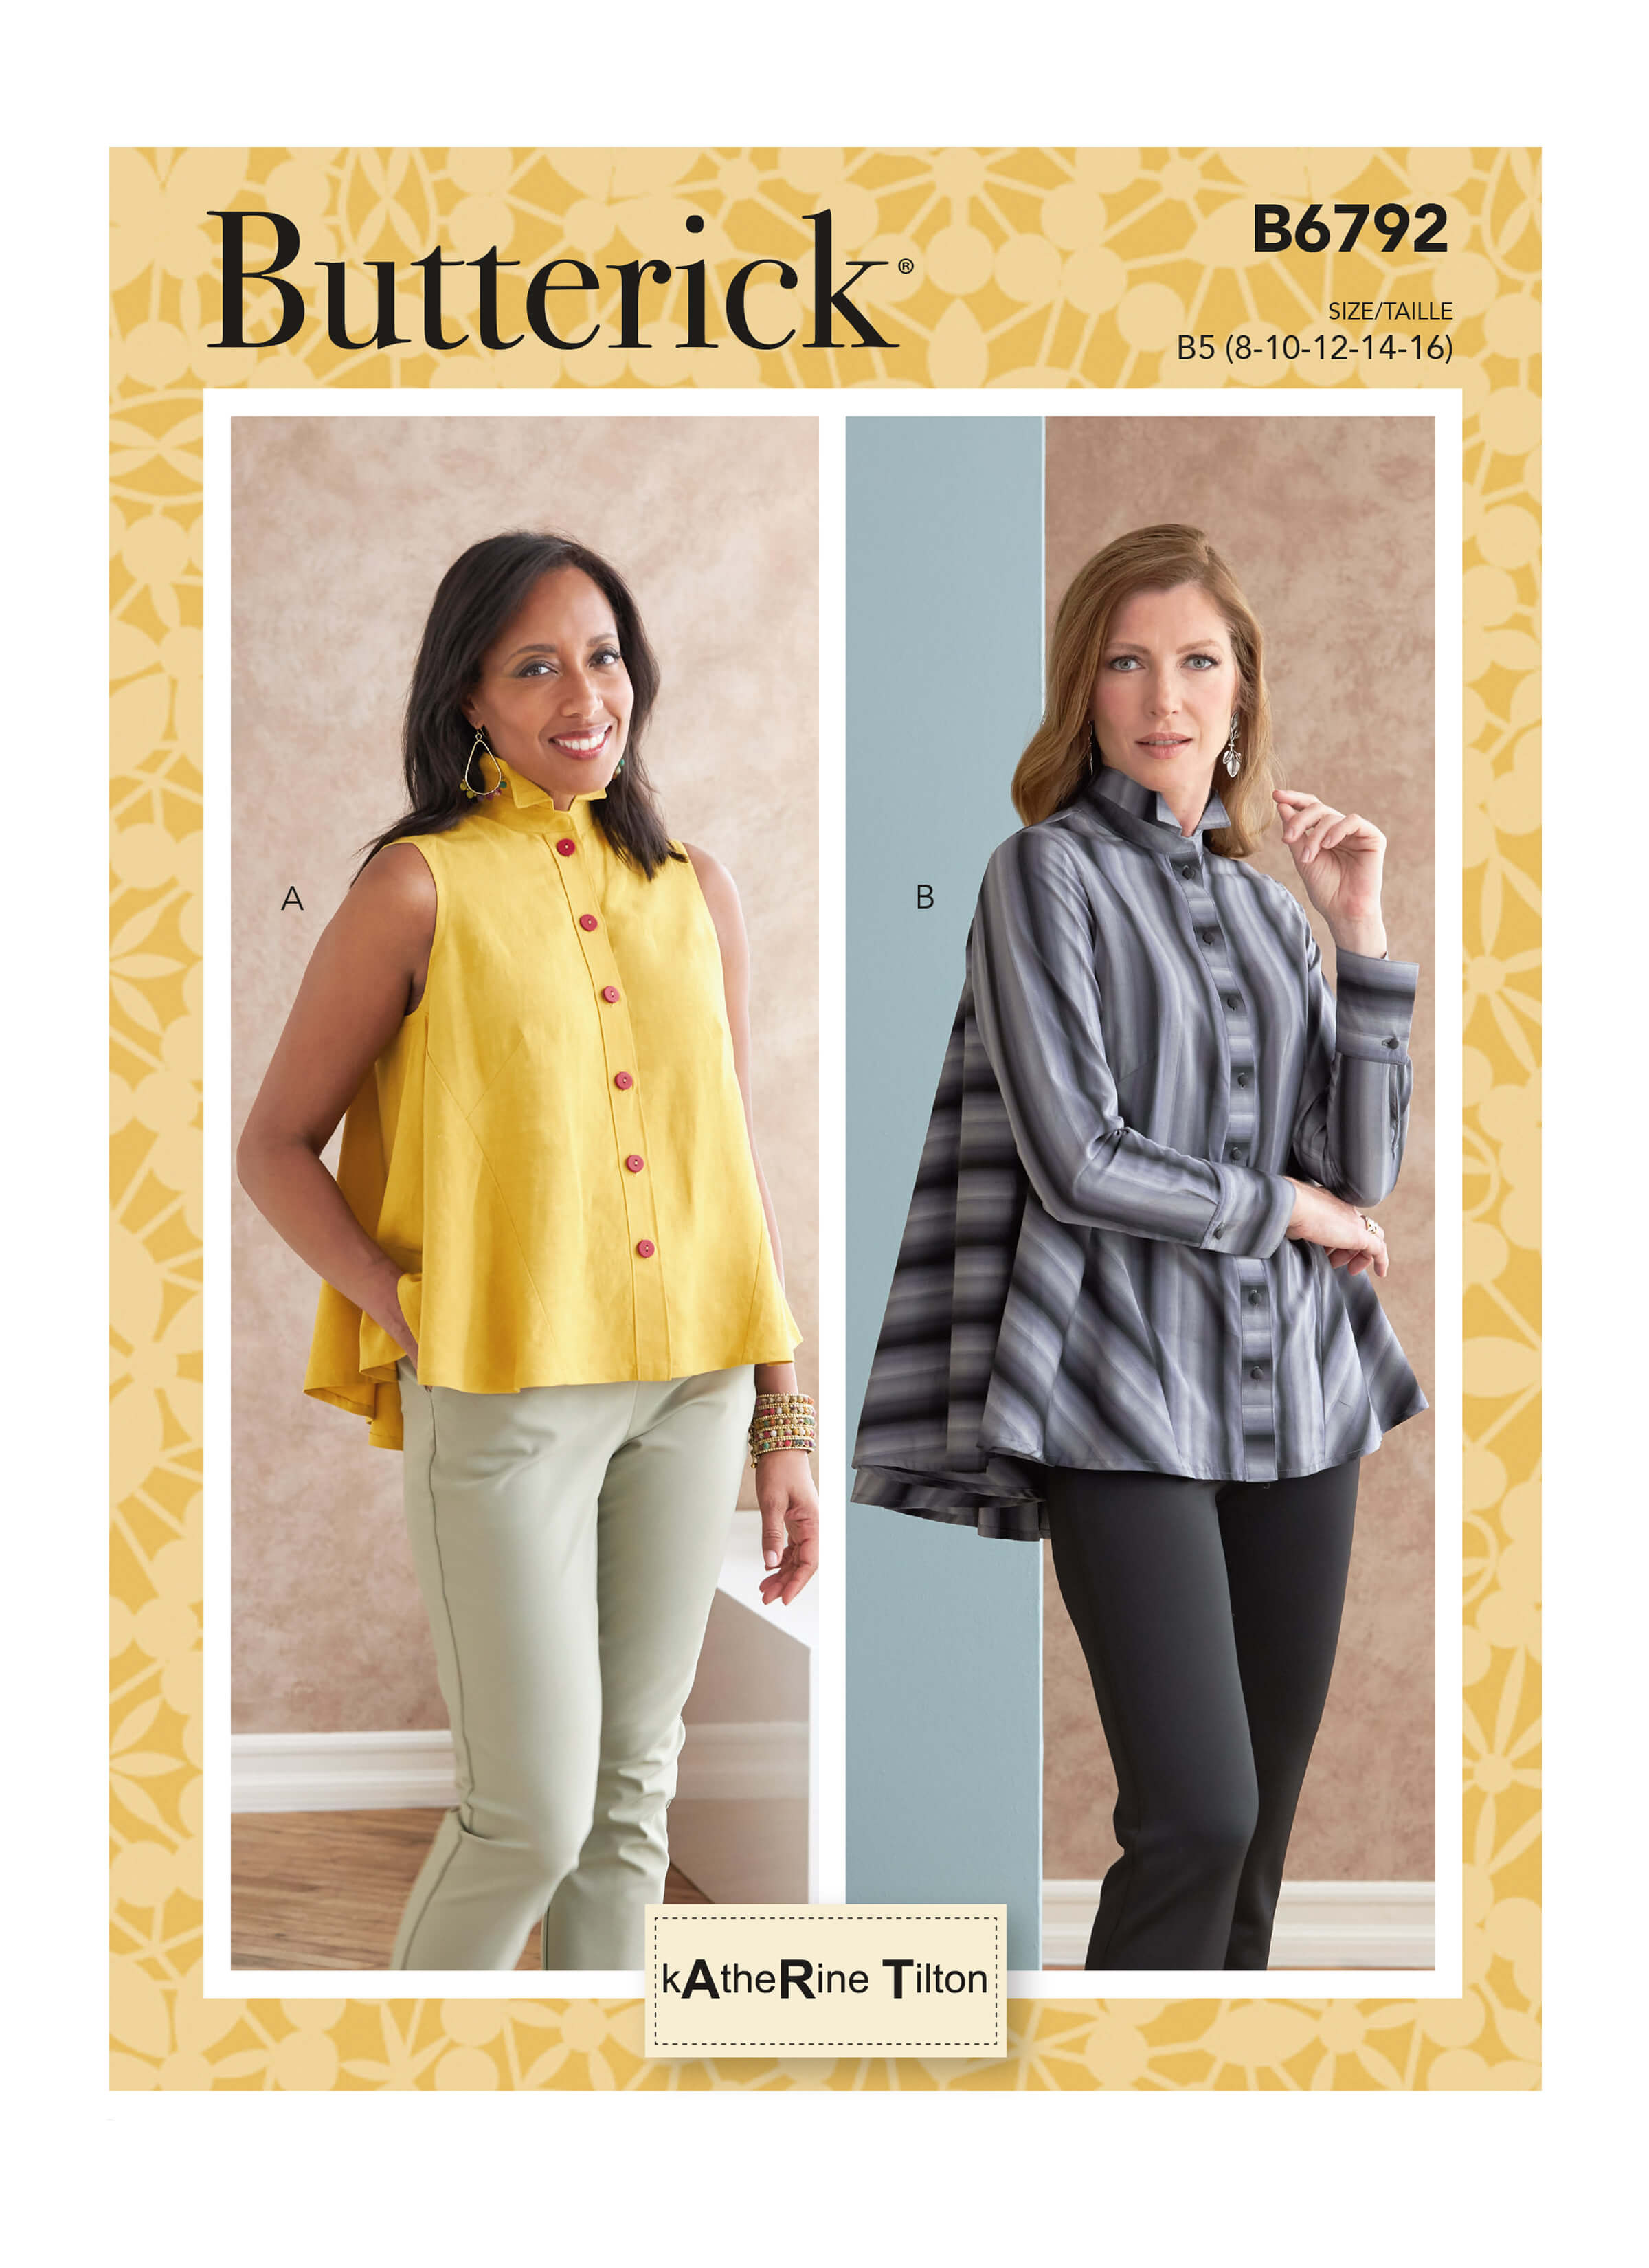 Butterick Sewing Pattern B6792 Misses' Top Katherine Tilton